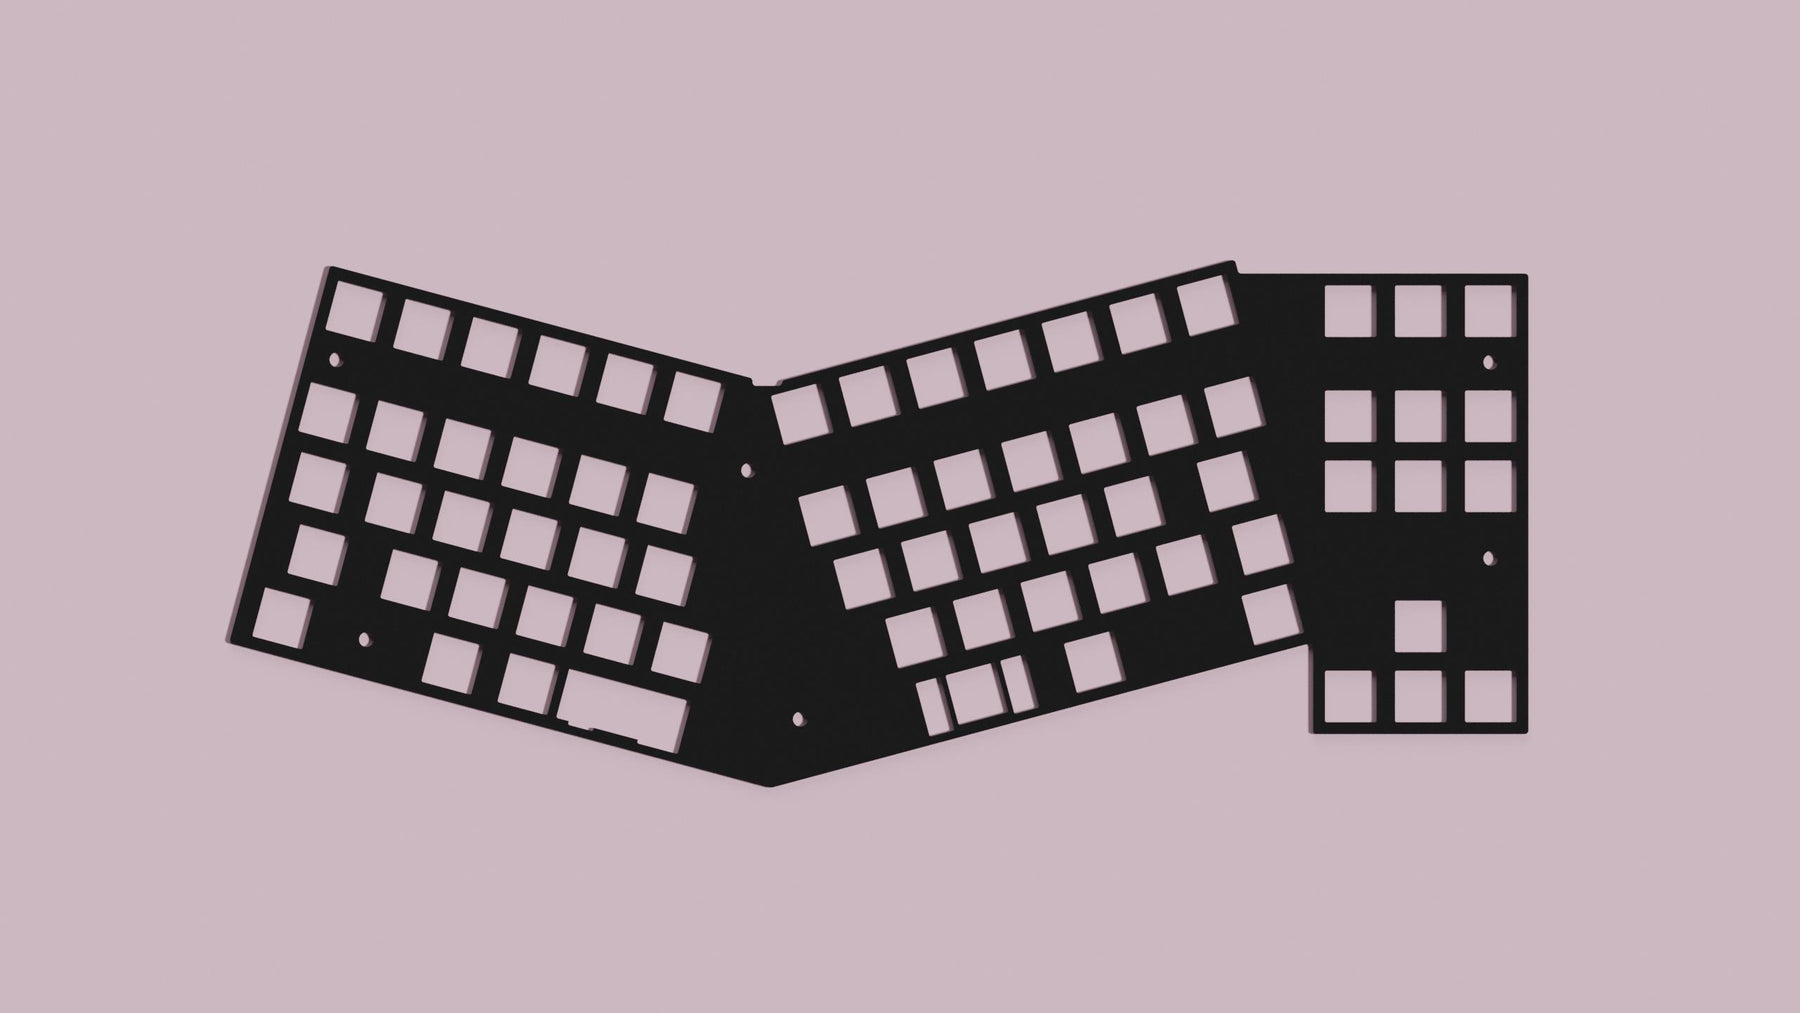 [GB] Nearfield Keyboard Kit